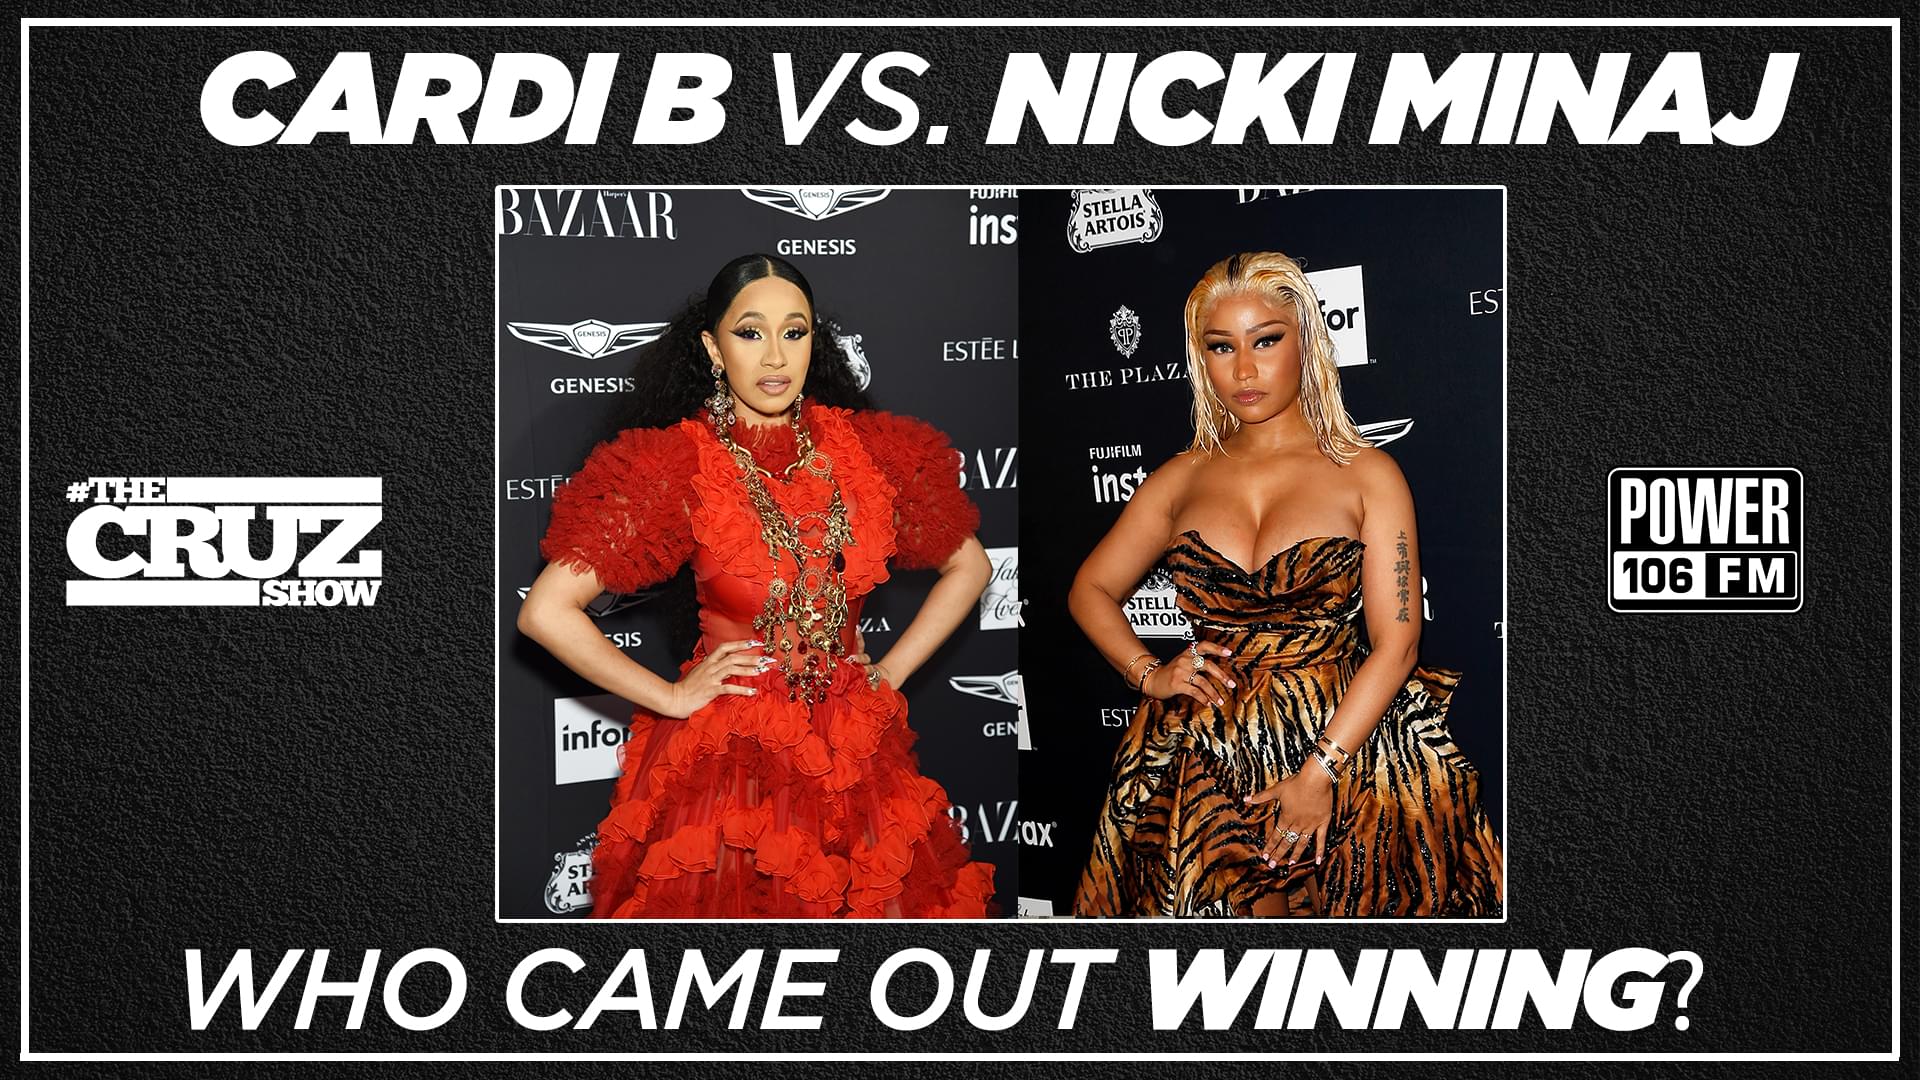 The Cruz Show Debates Who Won the Fight of the Year: Nicki Minaj or Cardi B? [WATCH